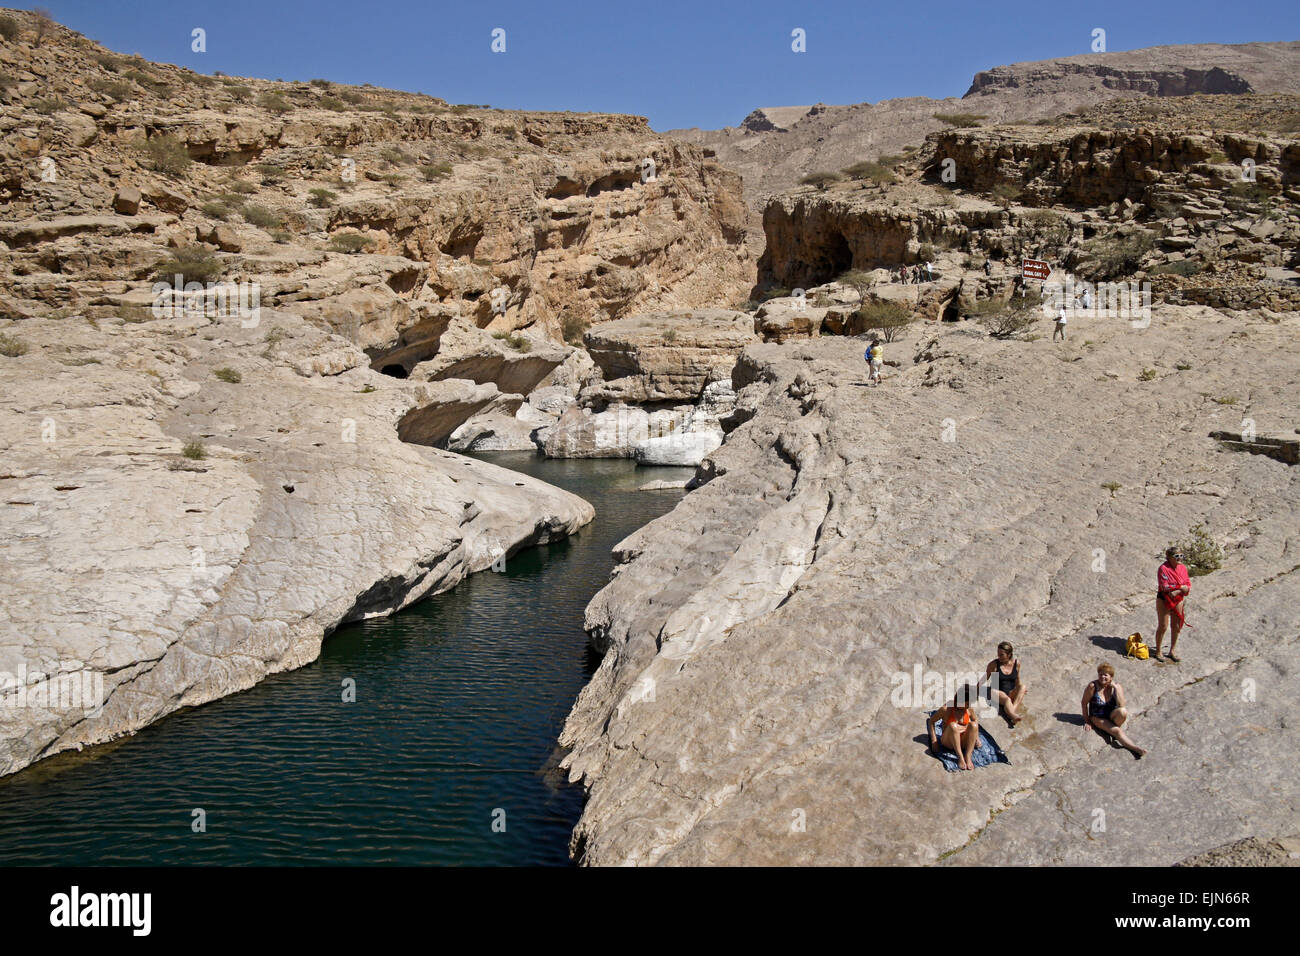 Tourists enjoying the sun and water in Wadi Bani Khalid, Sultanate of Oman Stock Photo